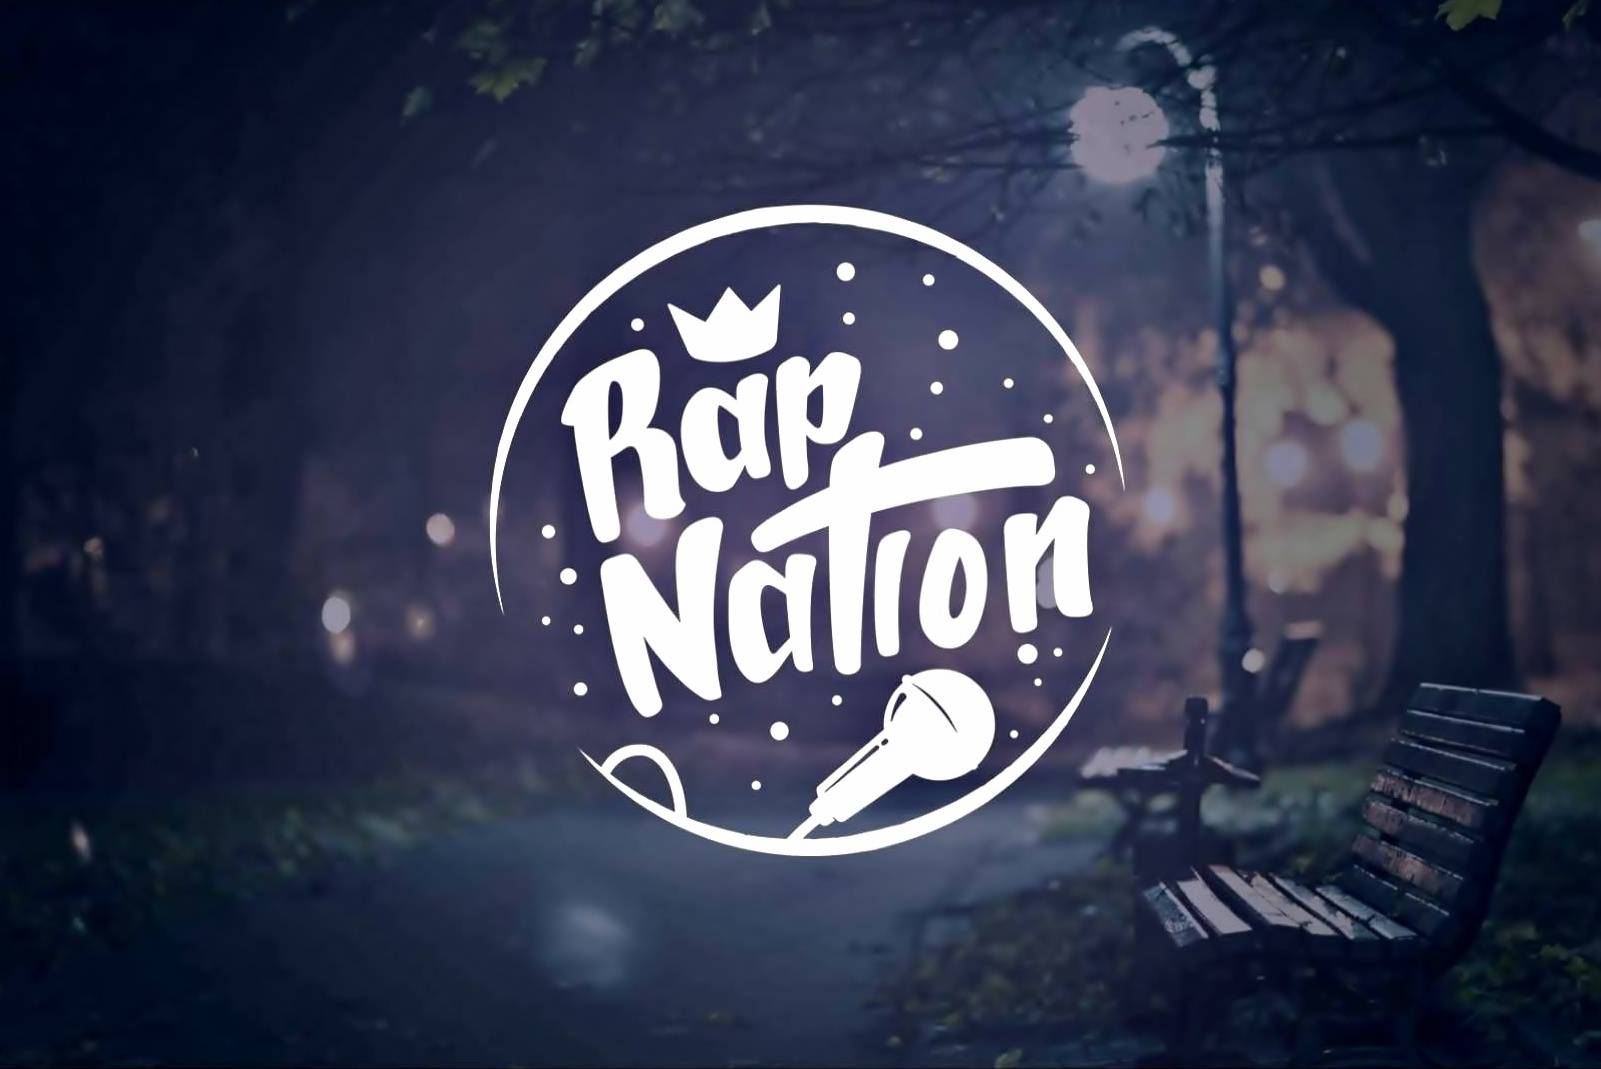 Rap Nation wallpaper